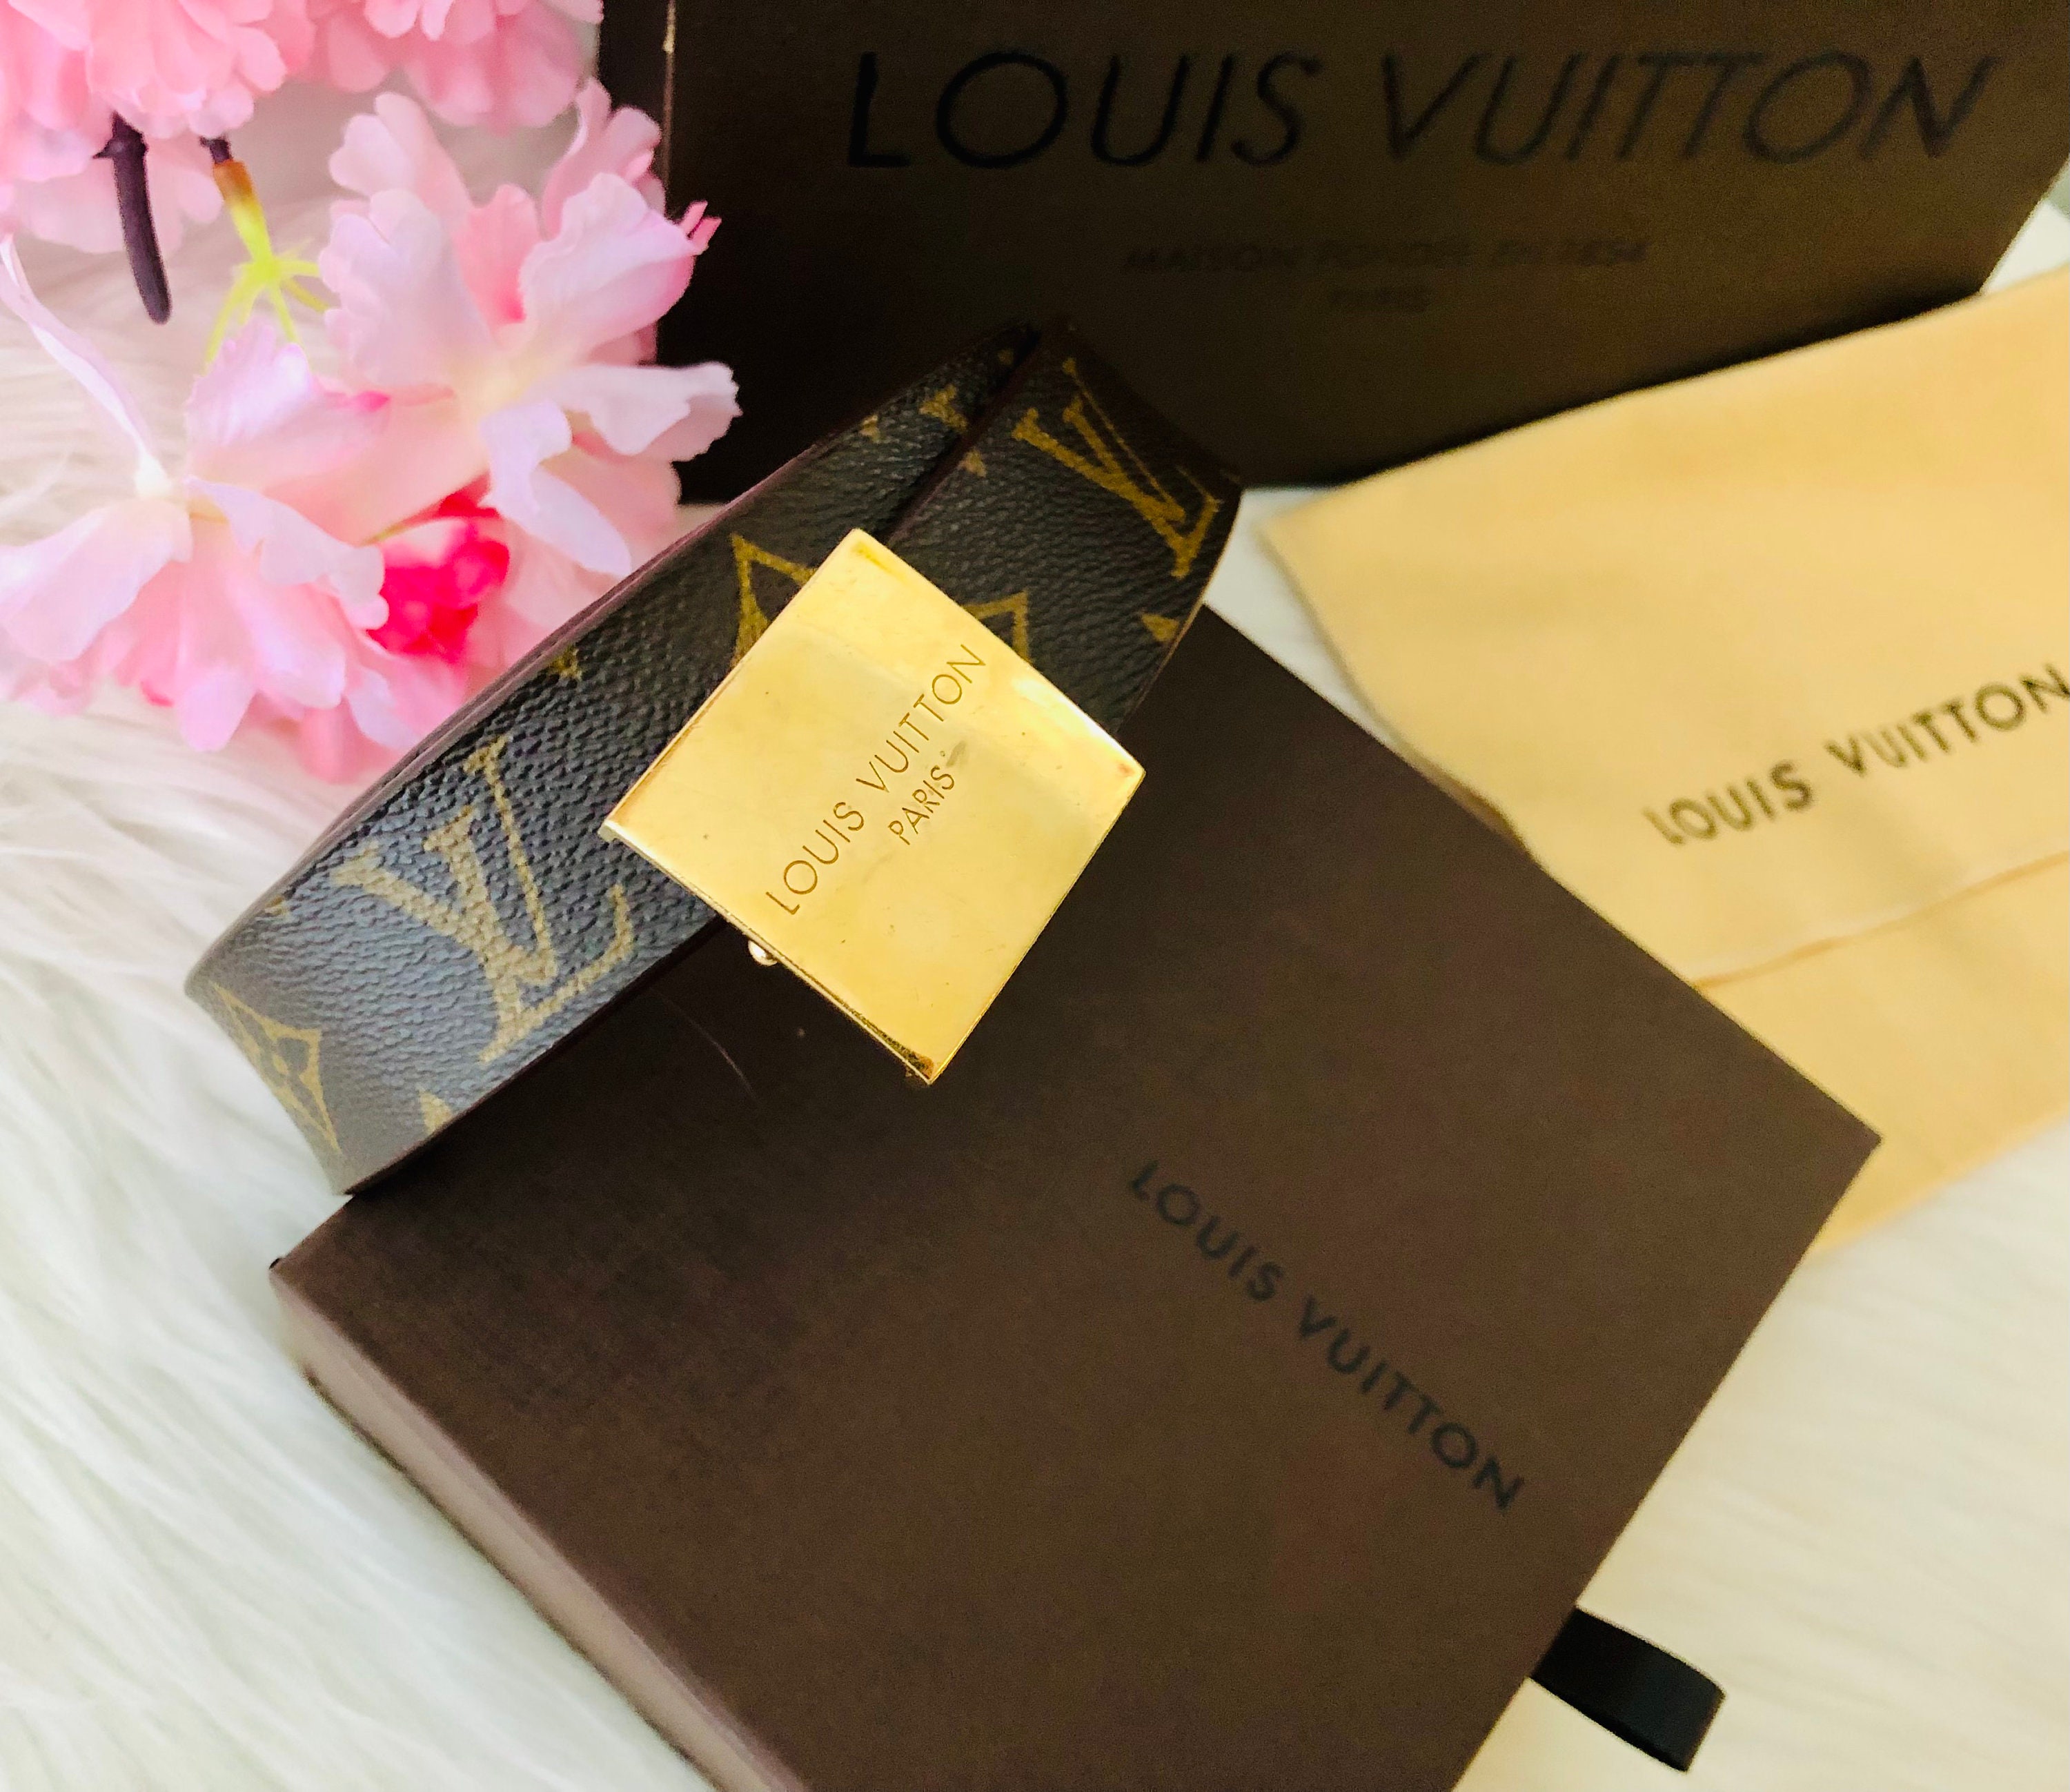 Louis Vuitton Belts 